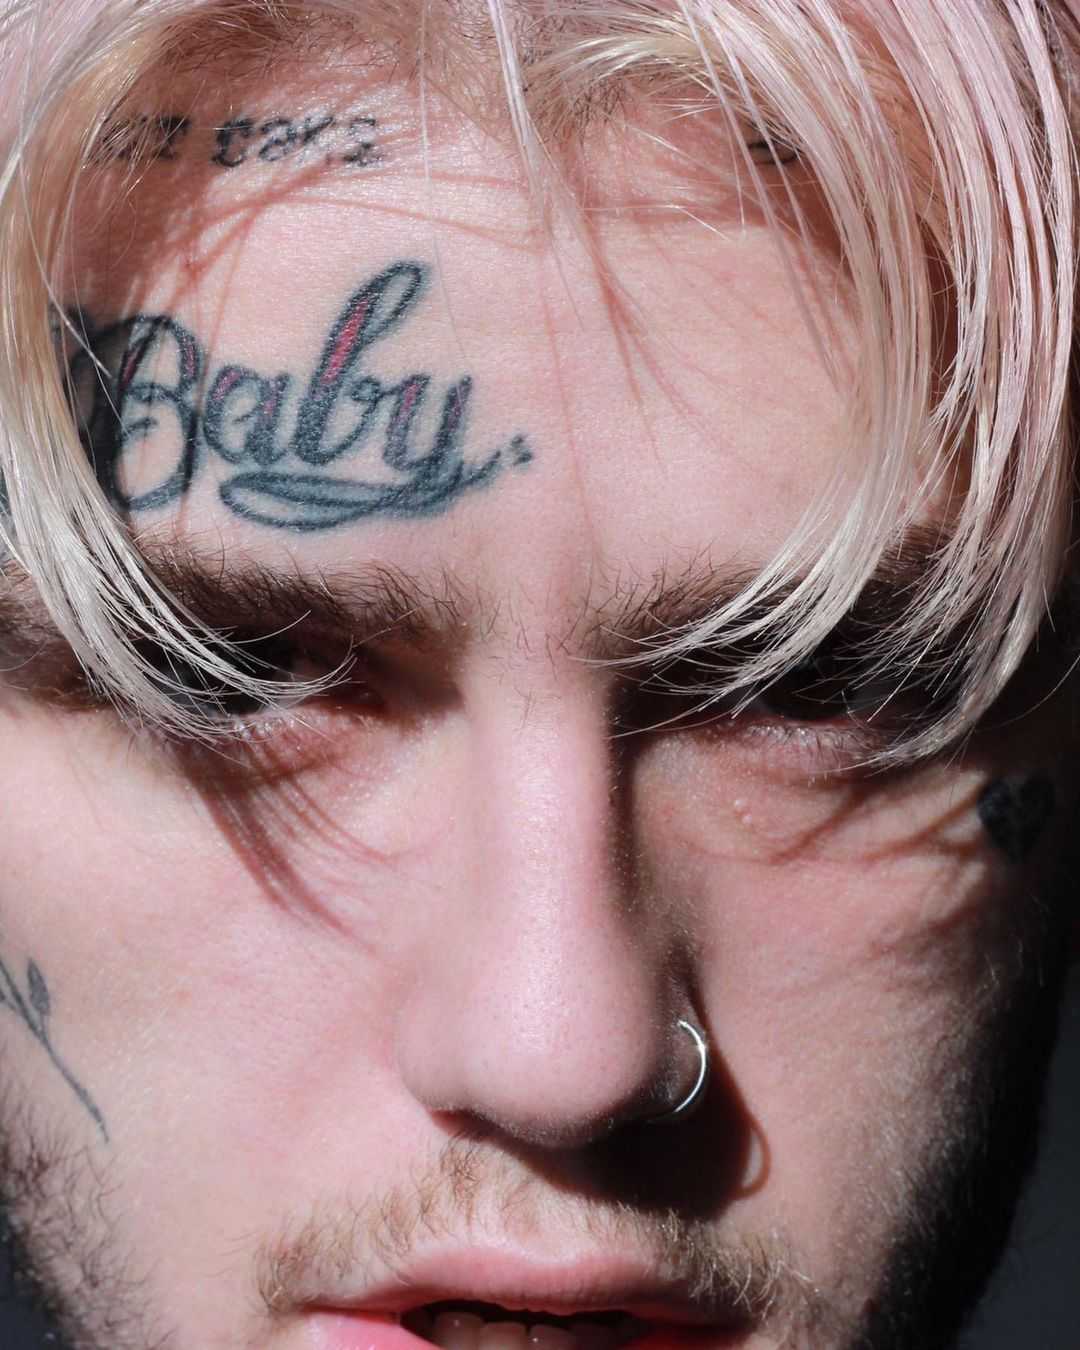 Lil Peep Cry Baby Tattoo 短袖T恤2色歐美潮牌饒舌歌手藝術家嘻哈搖滾CRYBABY 印花潮T  露天市集  全台最大的網路購物市集